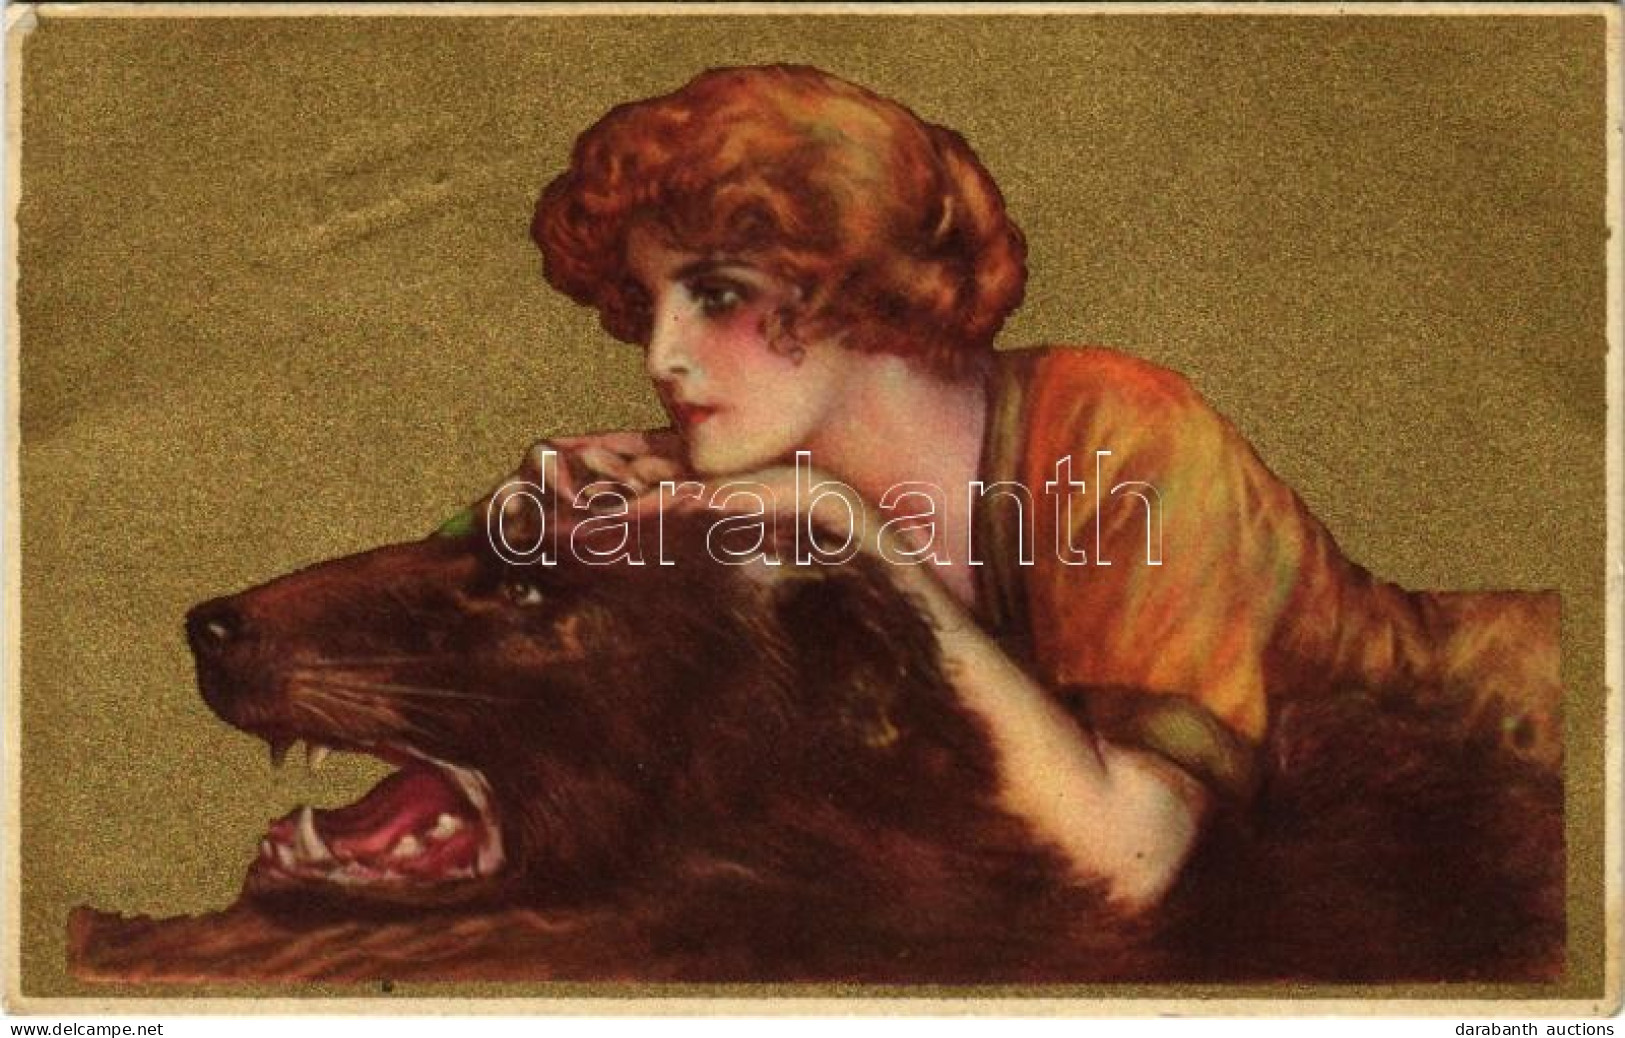 T2/T3 1922 Lady With Bear. Italian Golden Art Postcard. Anna & Gasparini 101-4. Unsigned Corbella (EK) - Sin Clasificación